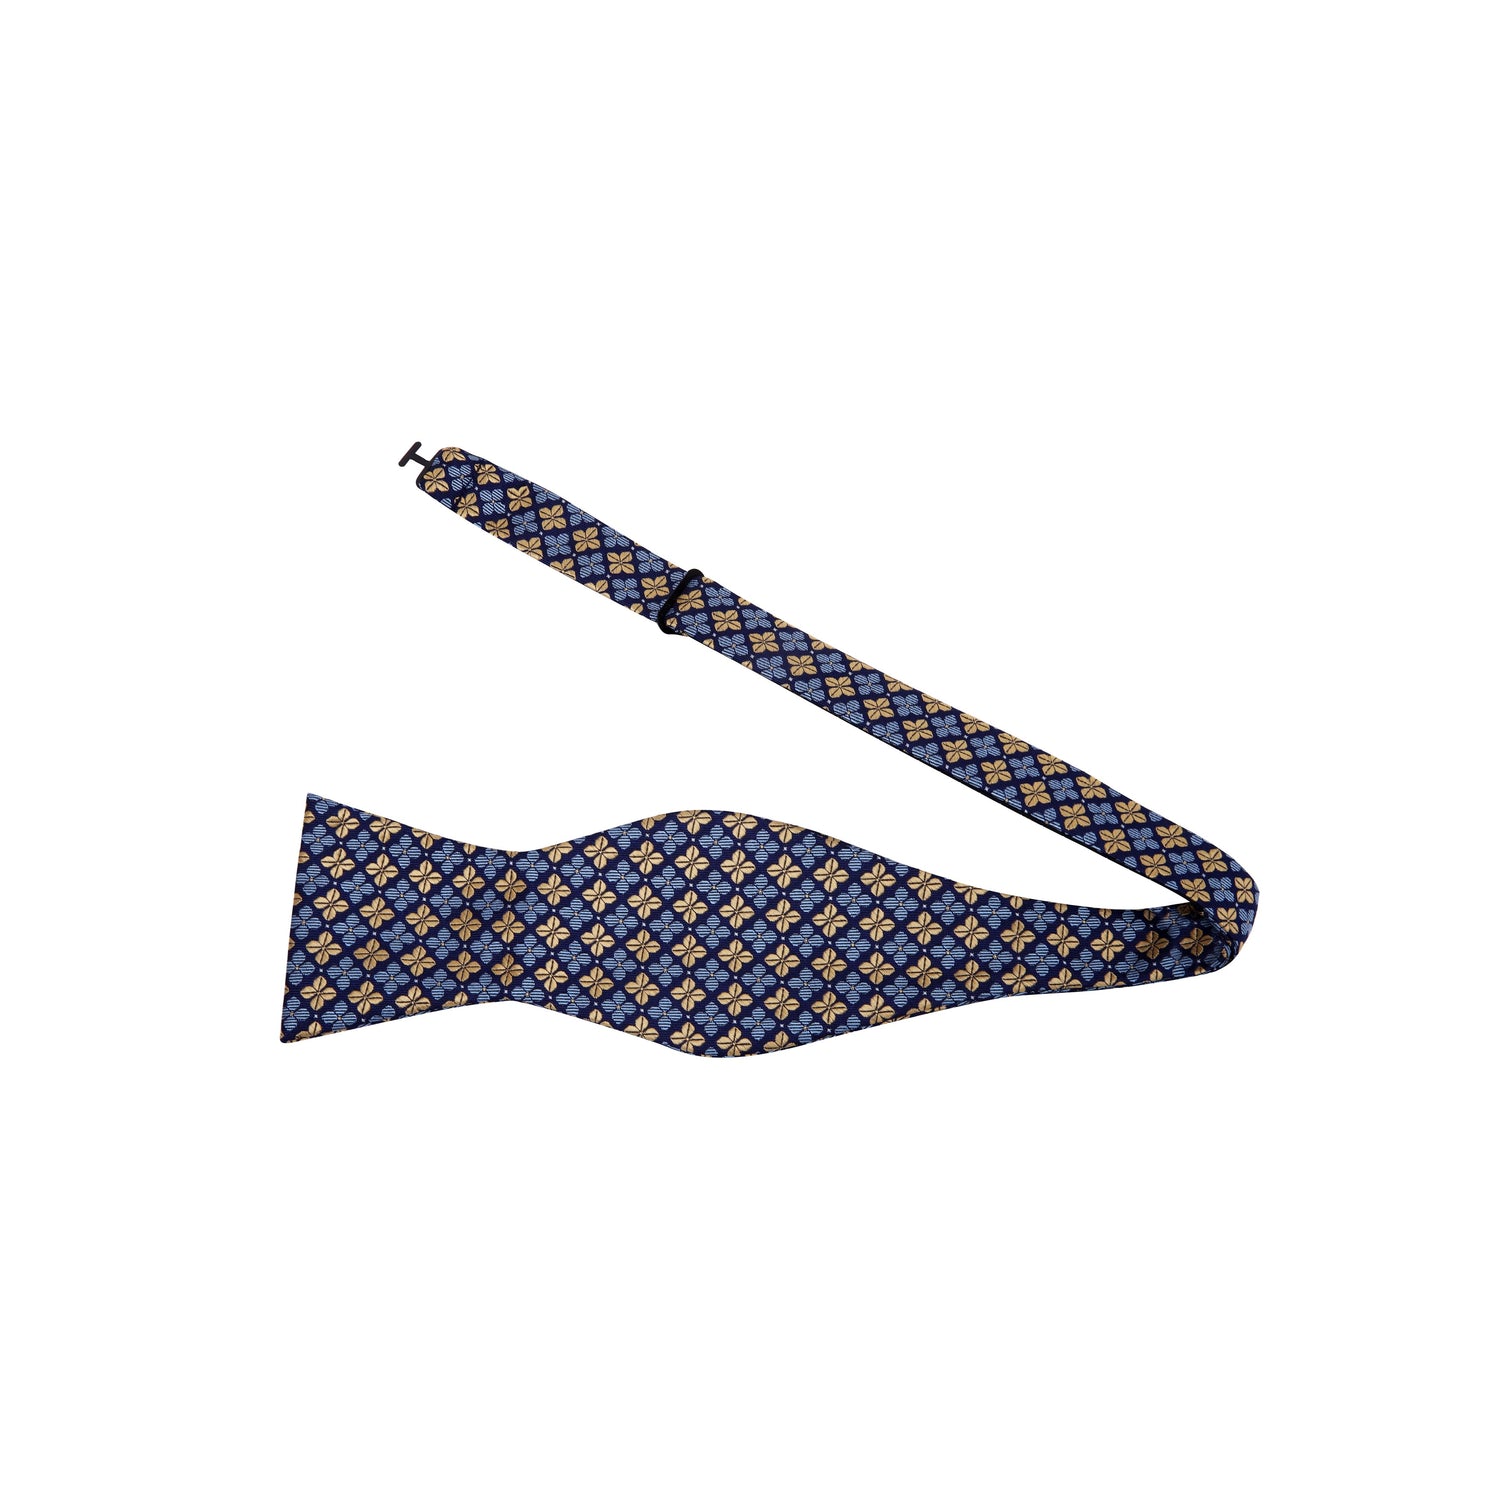 untied: A Light Blue, Gold Geometric Clover Pattern Silk Self Tie Bow Tie